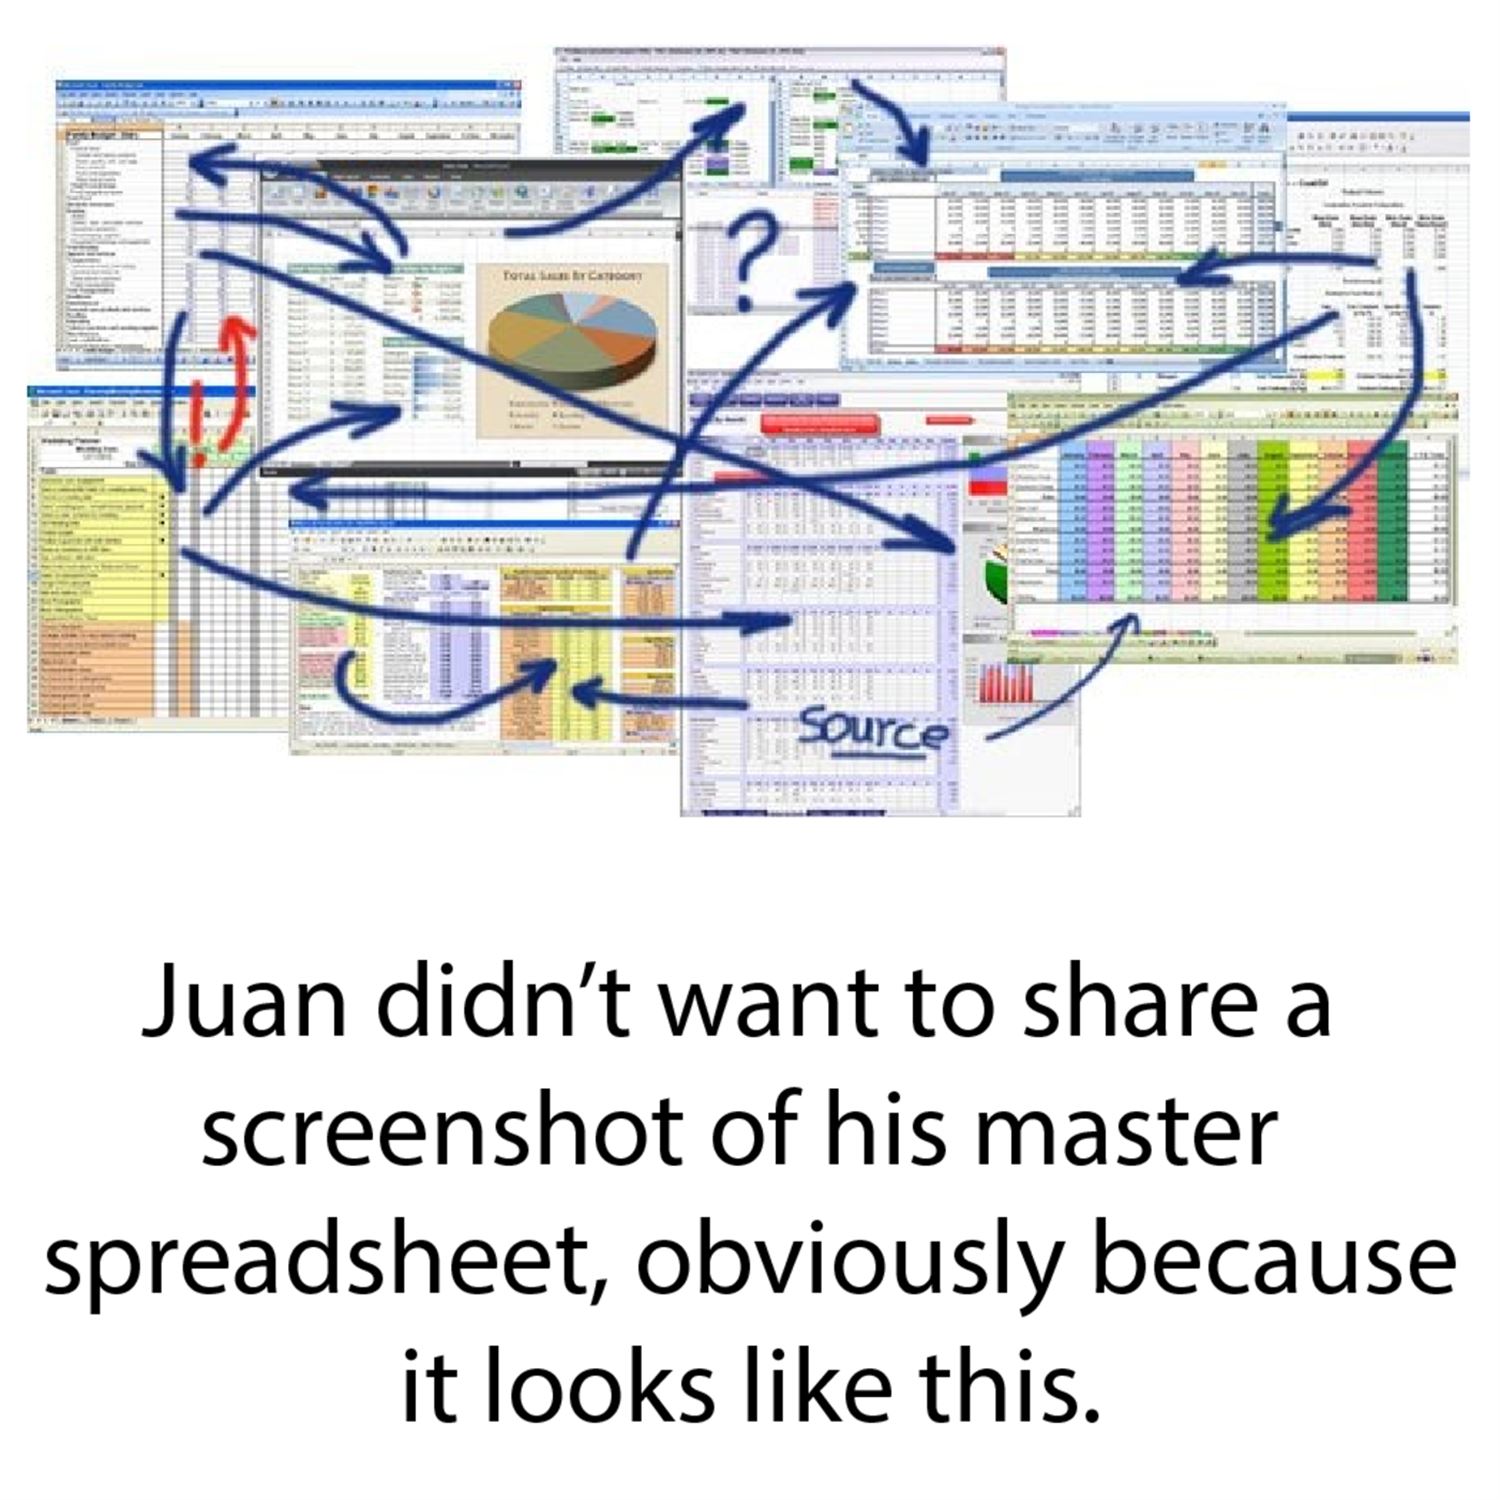 Predictions: Juan's master spreadsheet